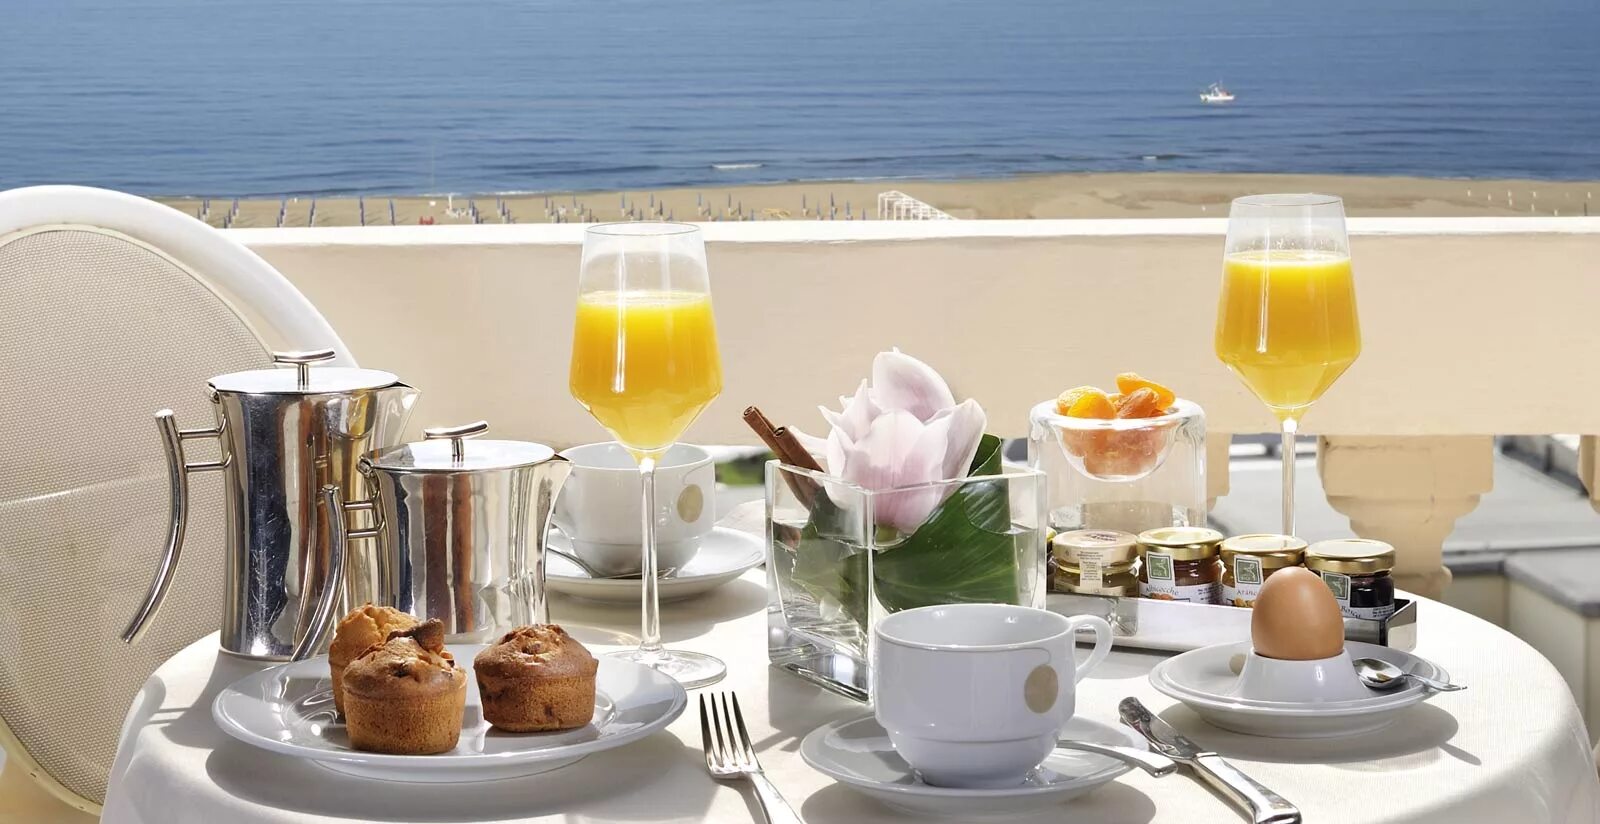 Утро ди. Гранд отель Виареджио. Принчипе ди Пьемонте Виареджио отель. Море Италия завтрак Позитано. Завтрак с видом на море.